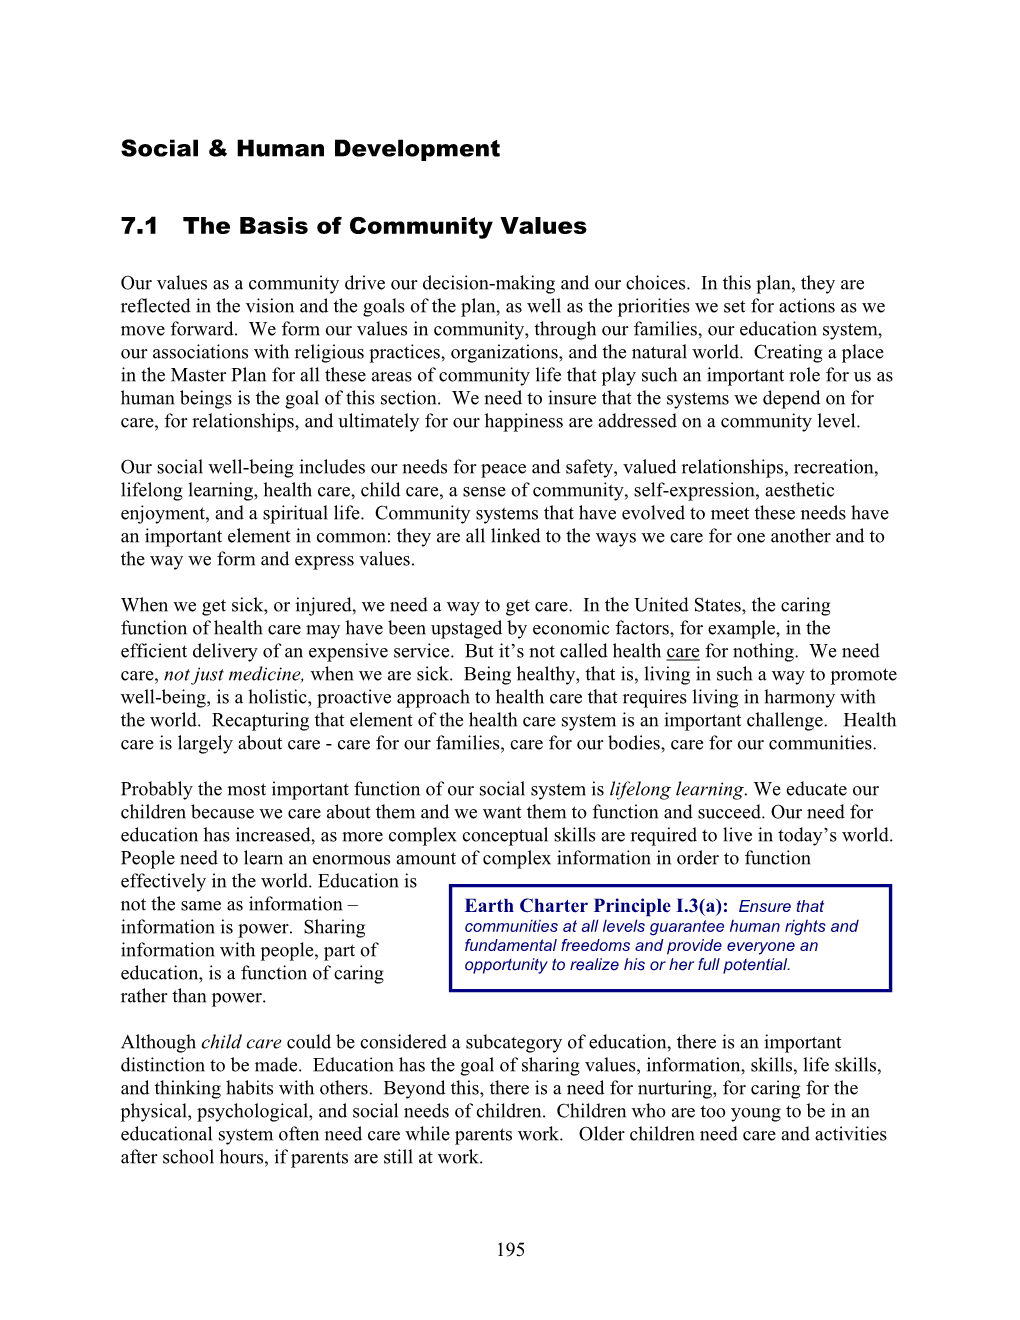 Social & Human Development 7.1 the Basis of Community Values